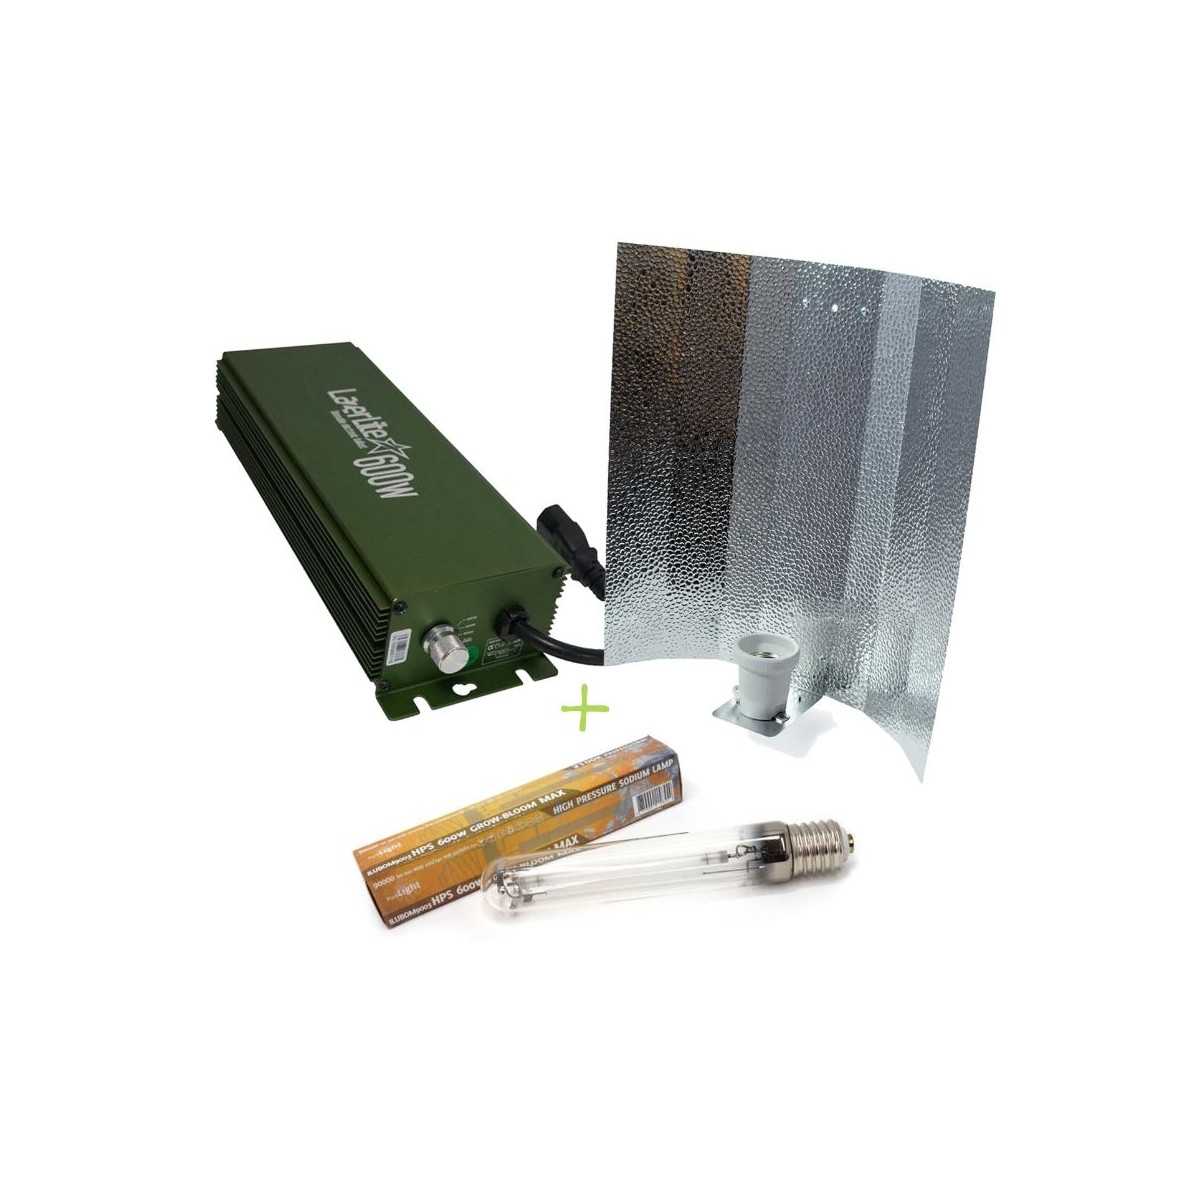 Kit 600w Electronico Regulable Lazerlite